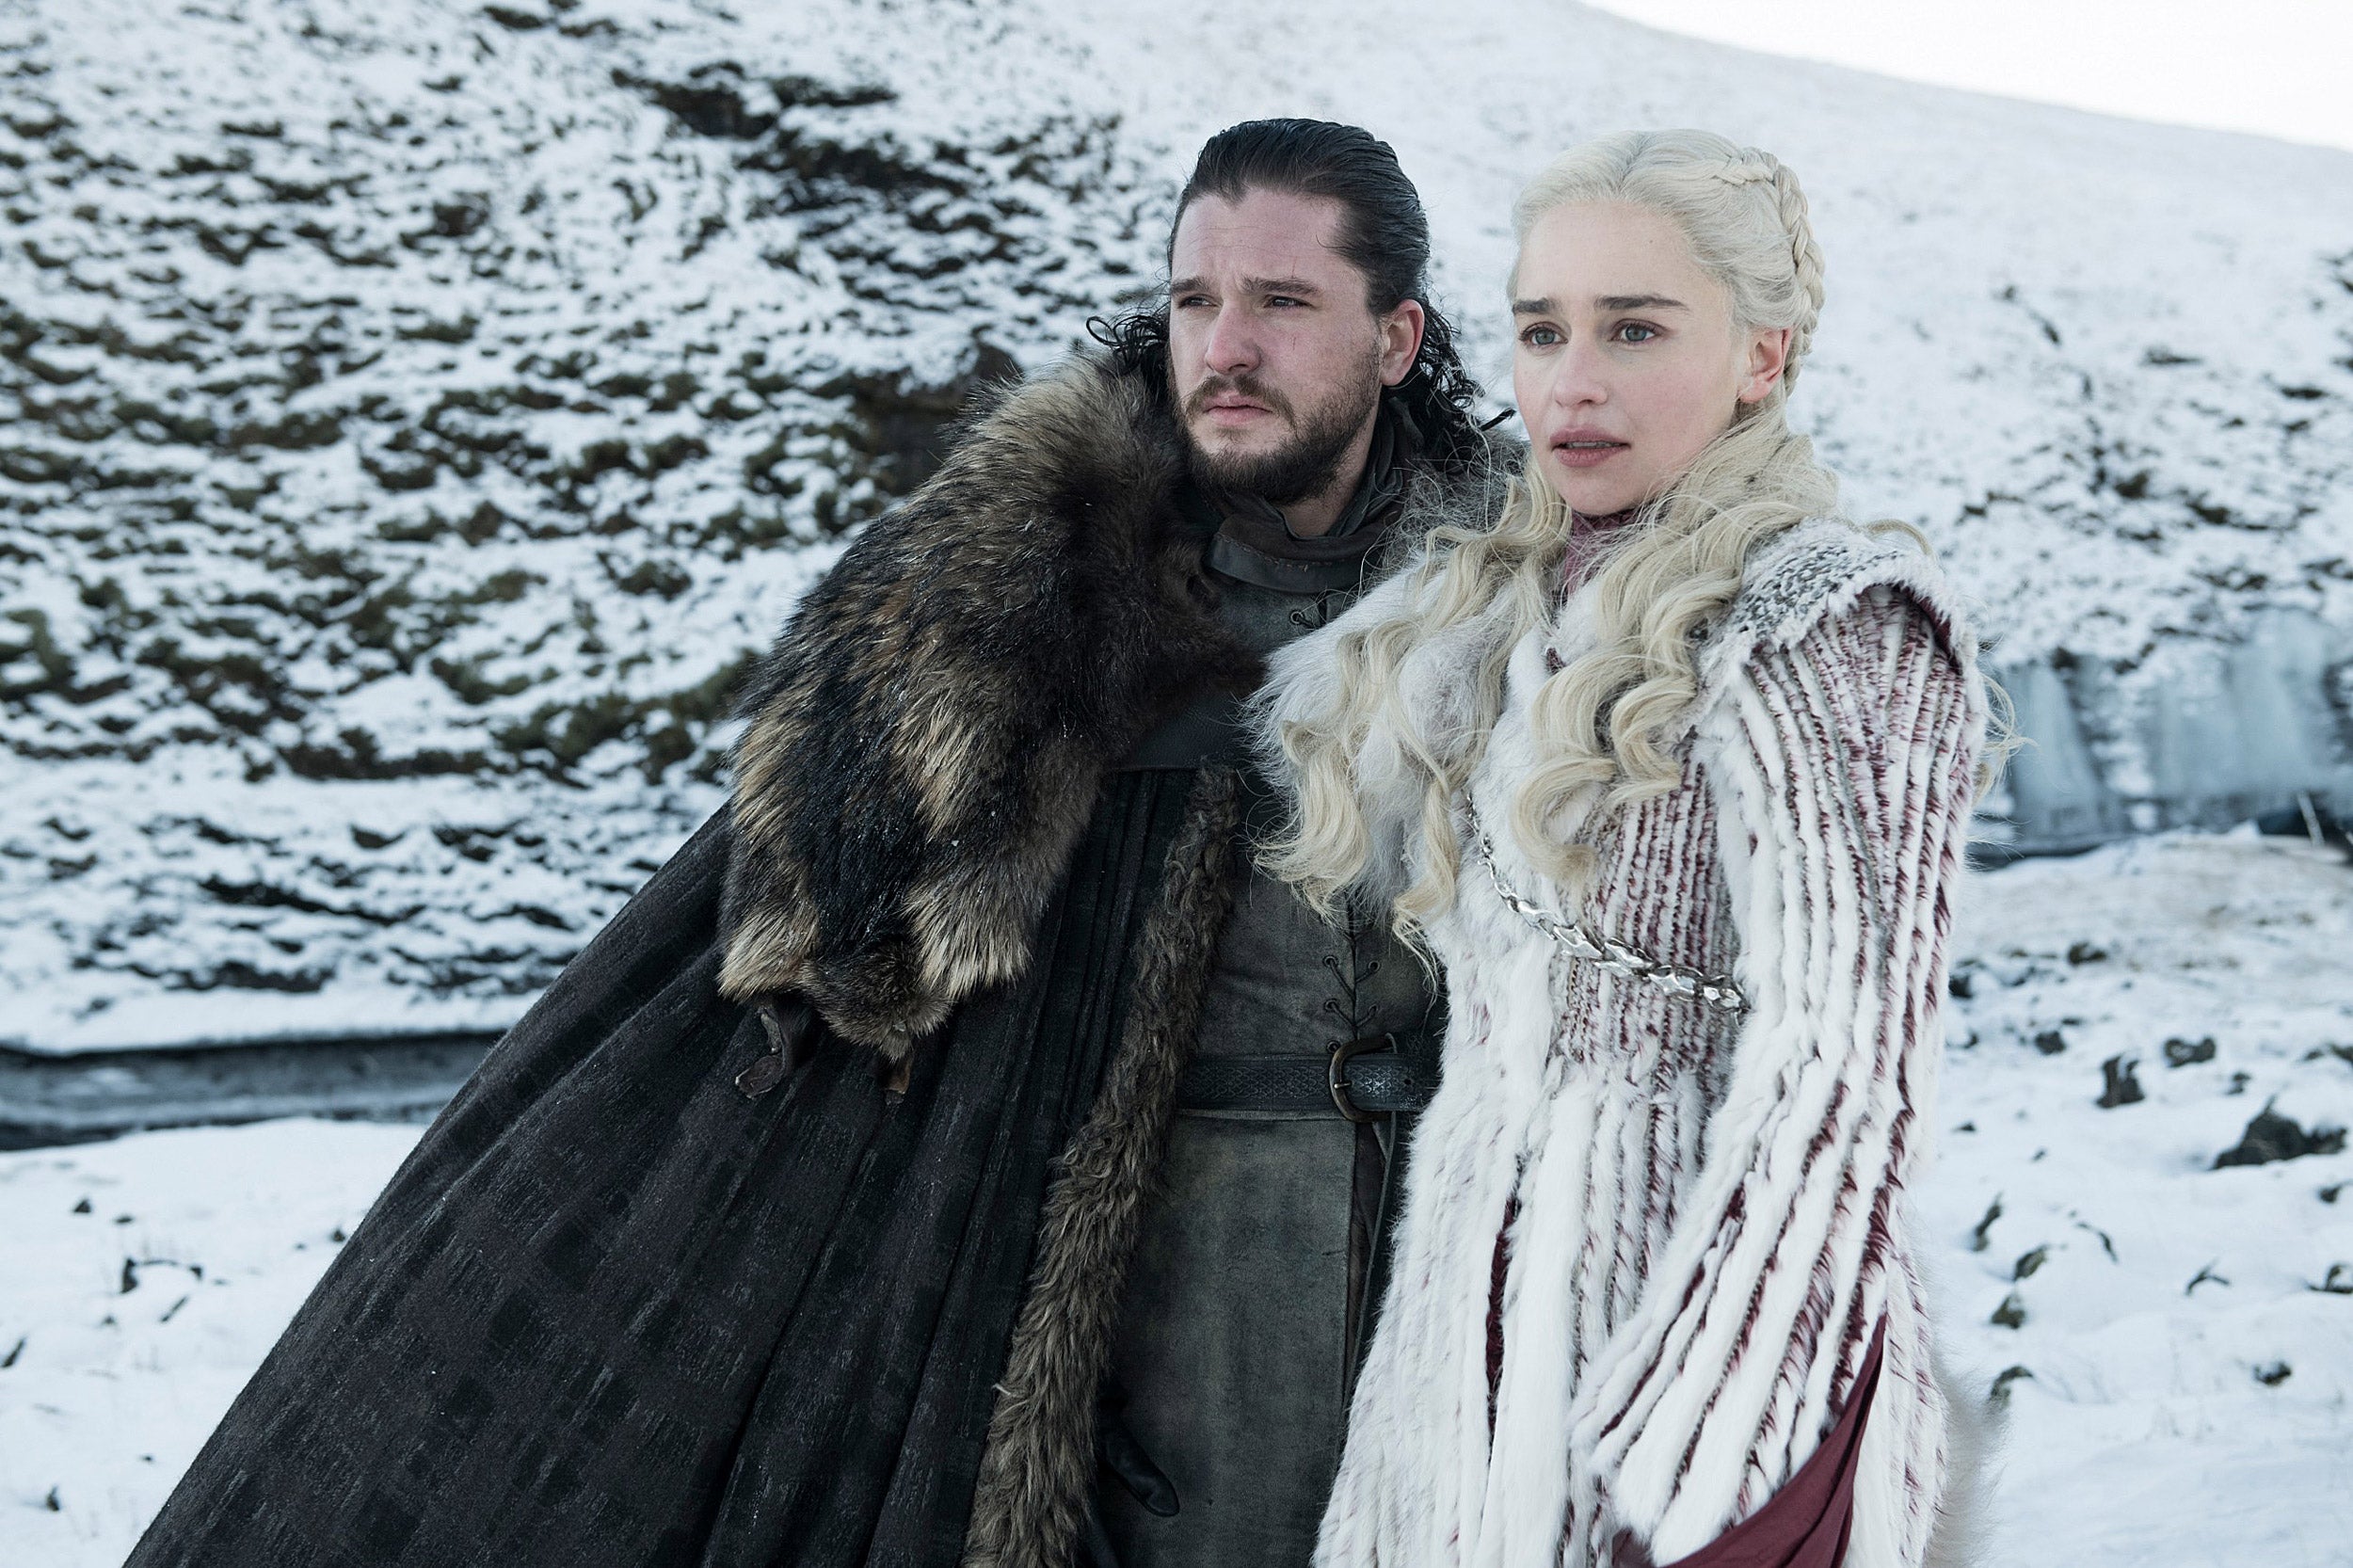 Kit Harington as Jon Snow and Emilia Clarke as Daenerys Targaryen.